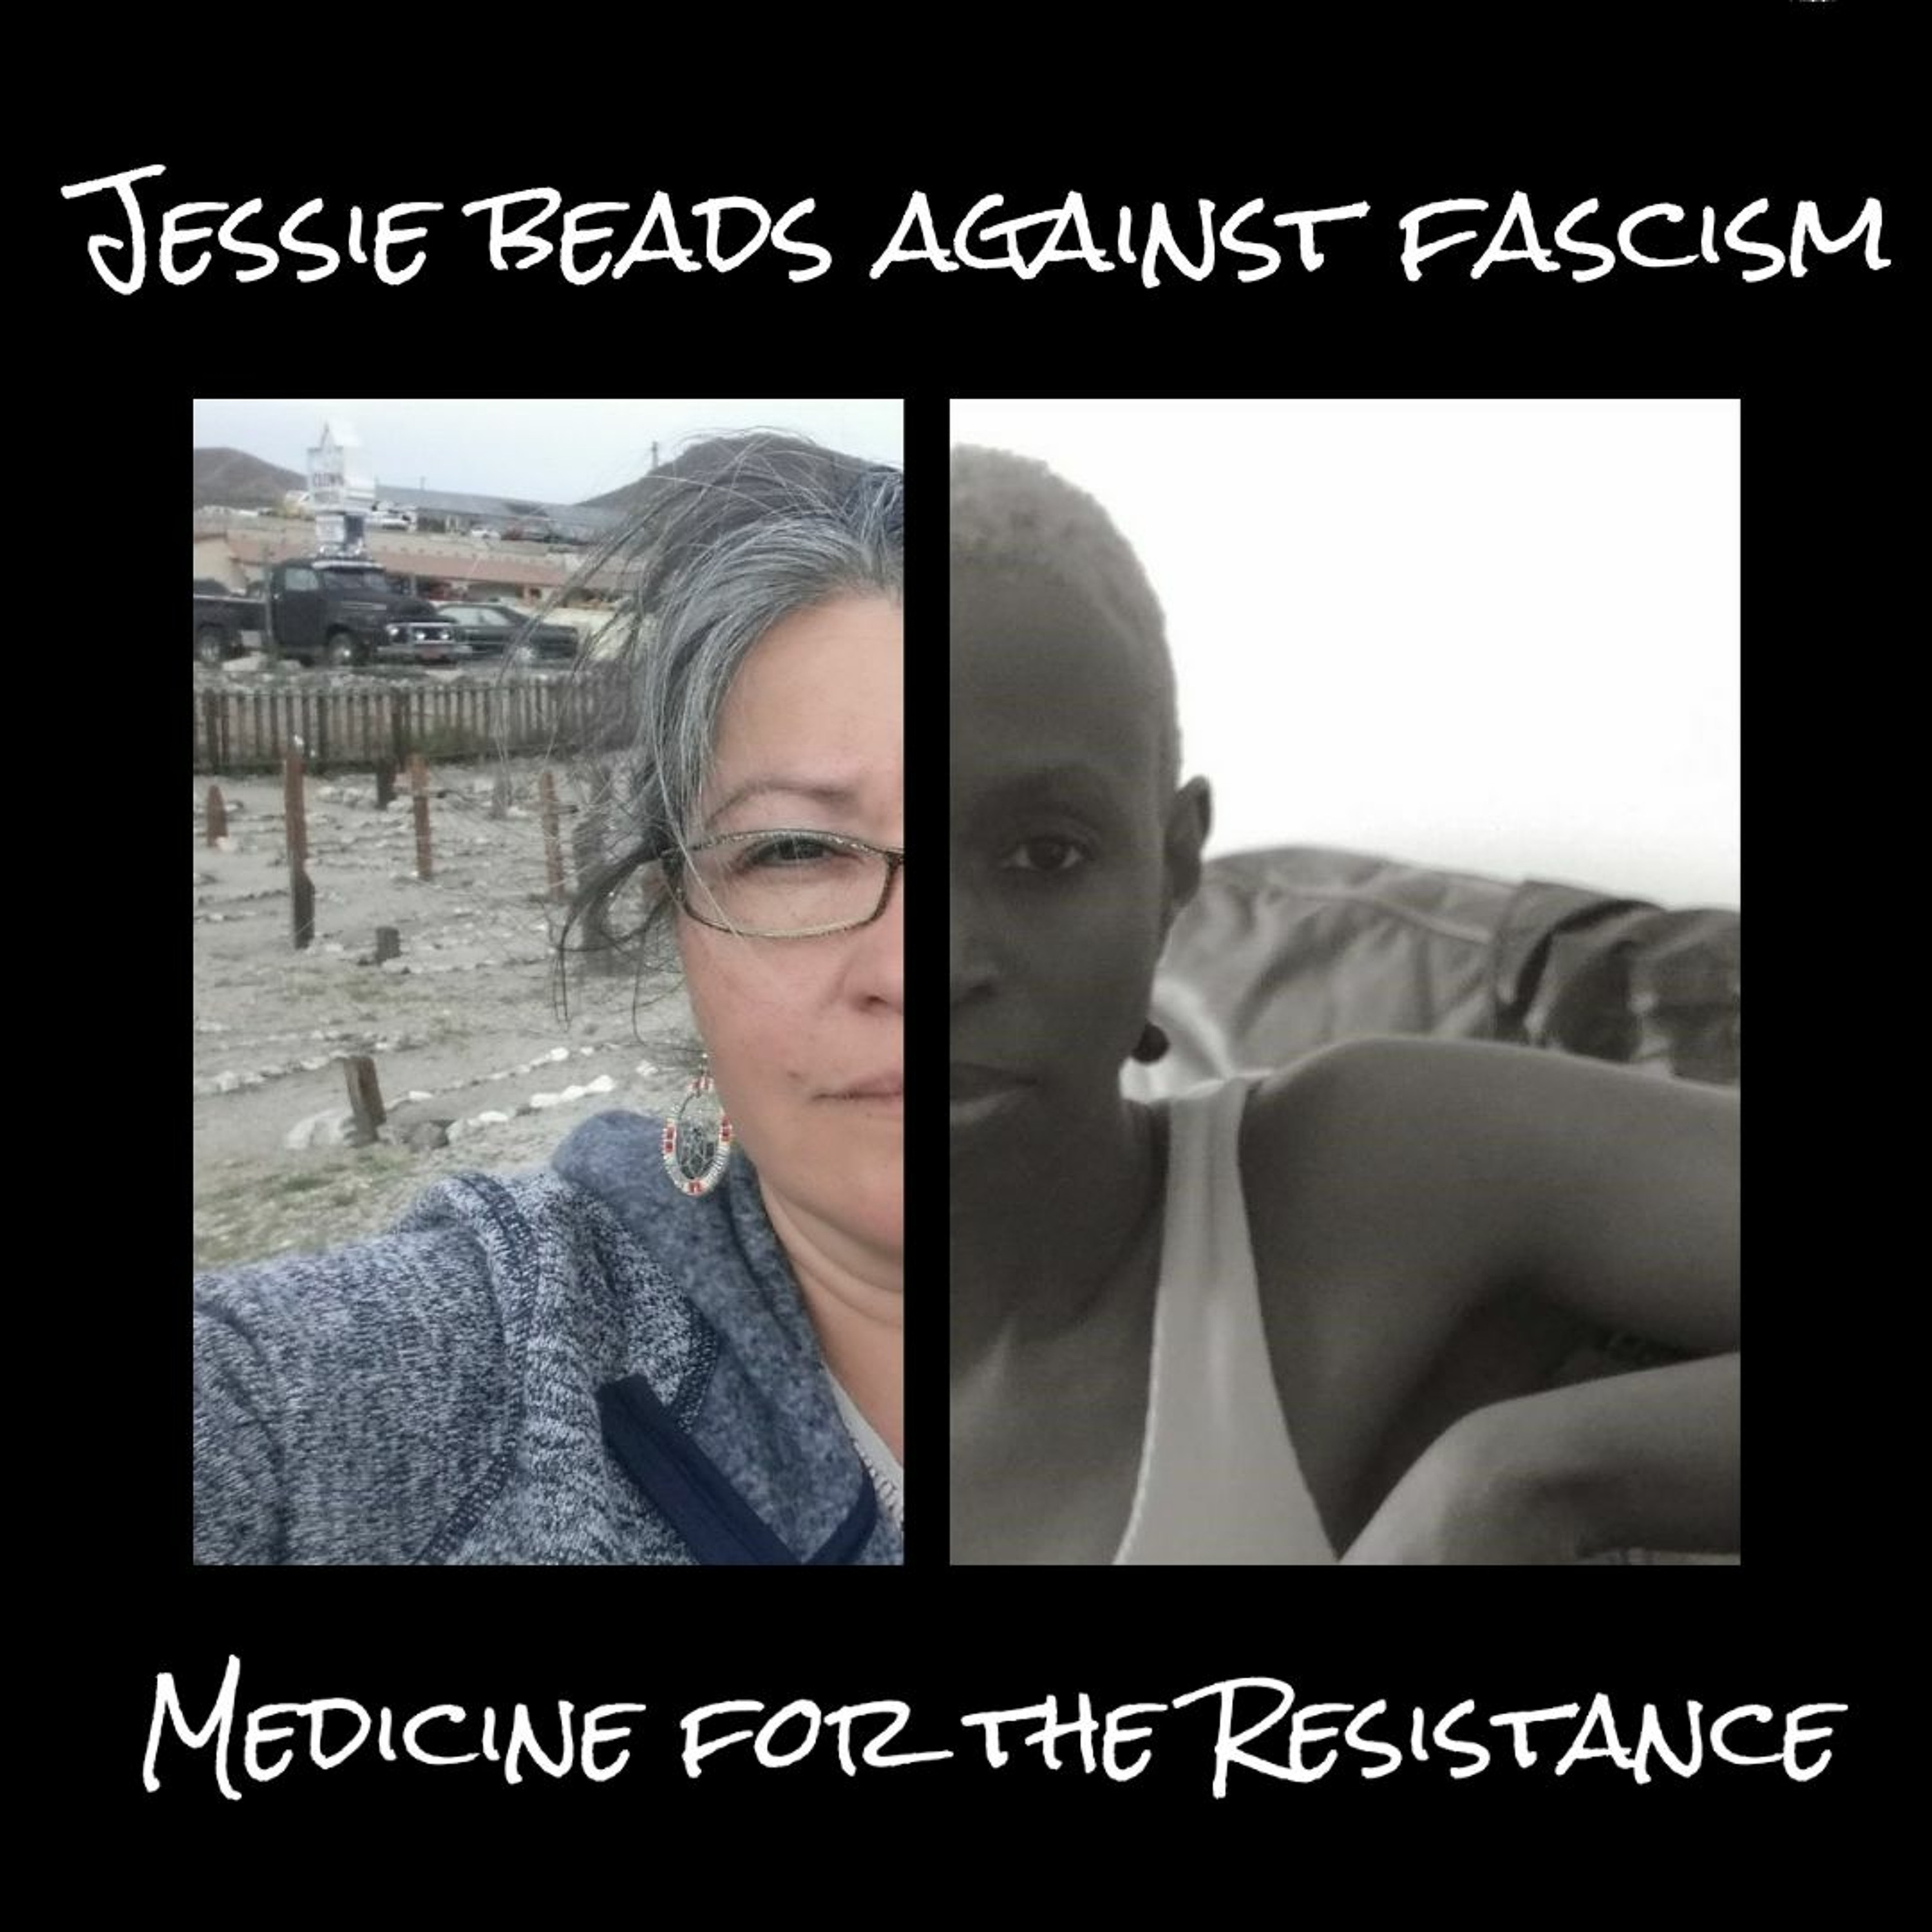 Jess beads against fascism